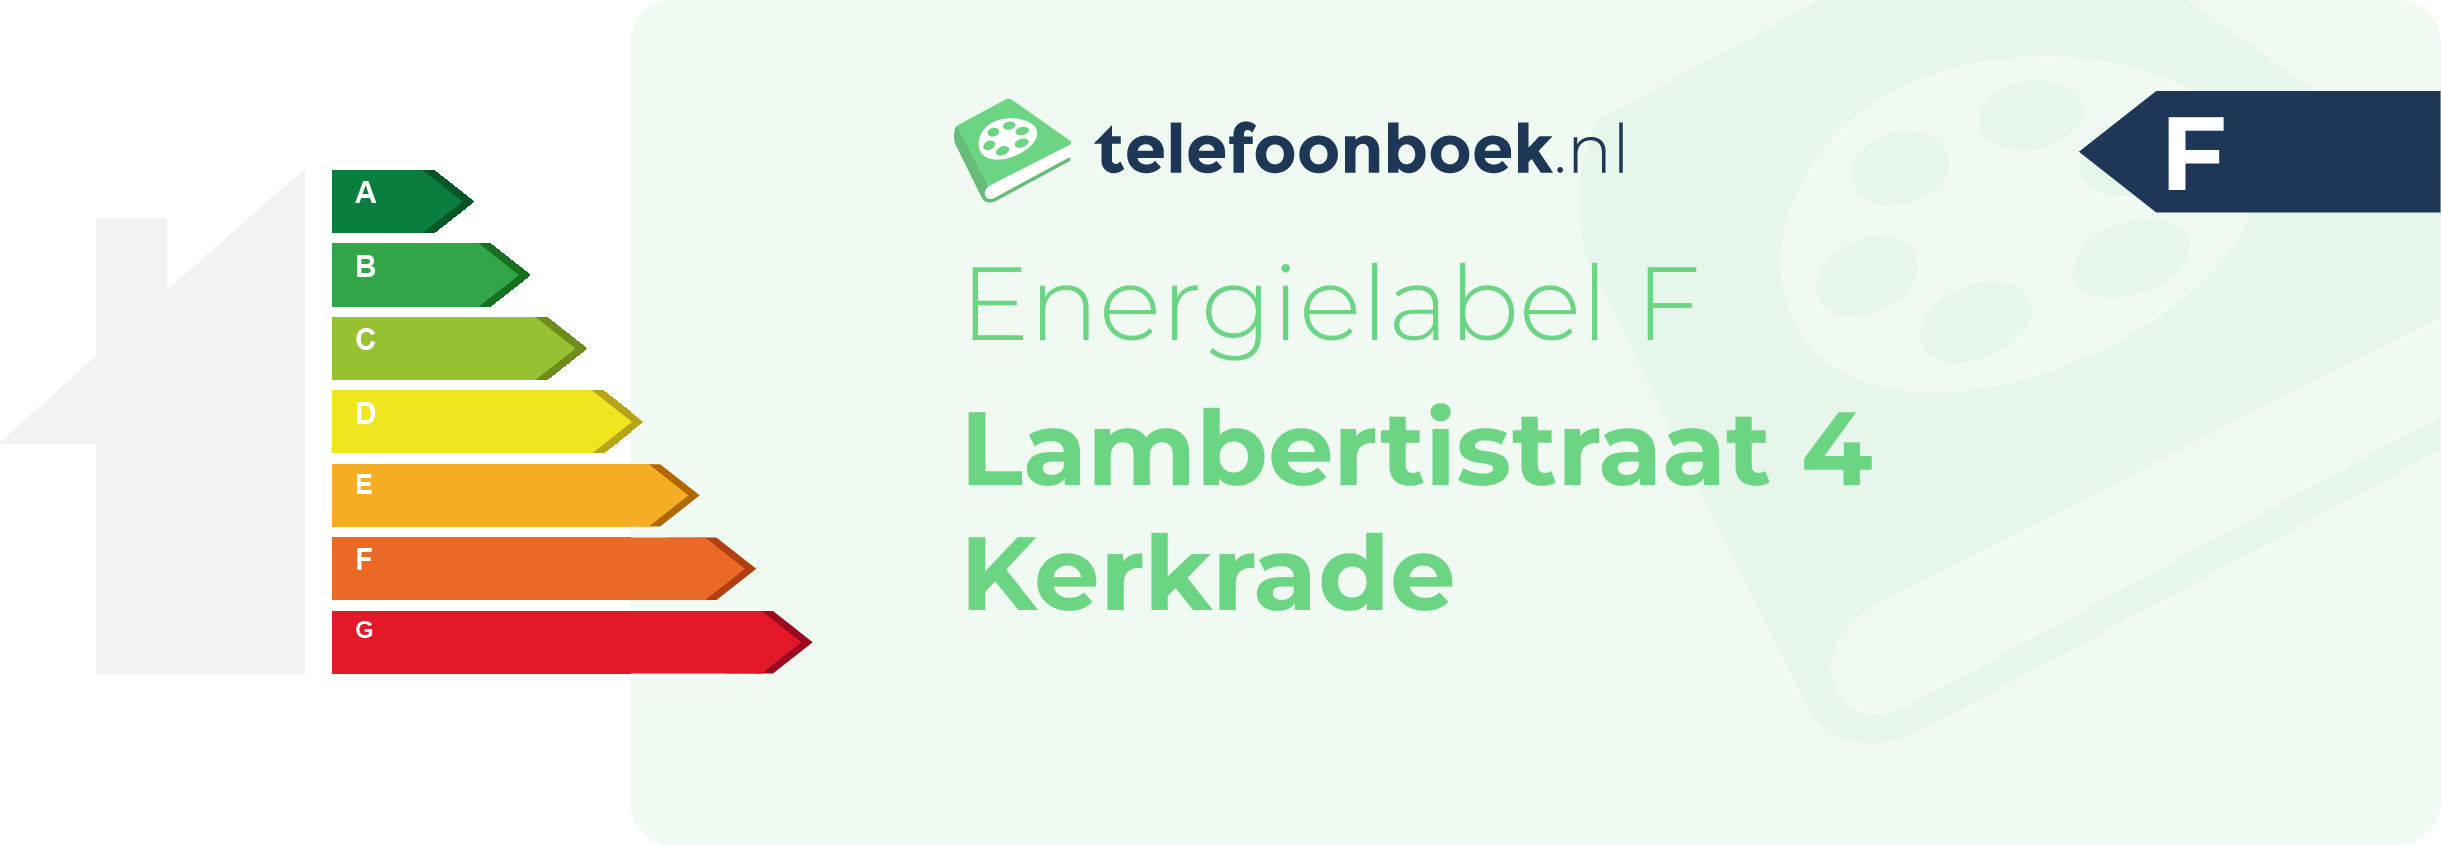 Energielabel Lambertistraat 4 Kerkrade